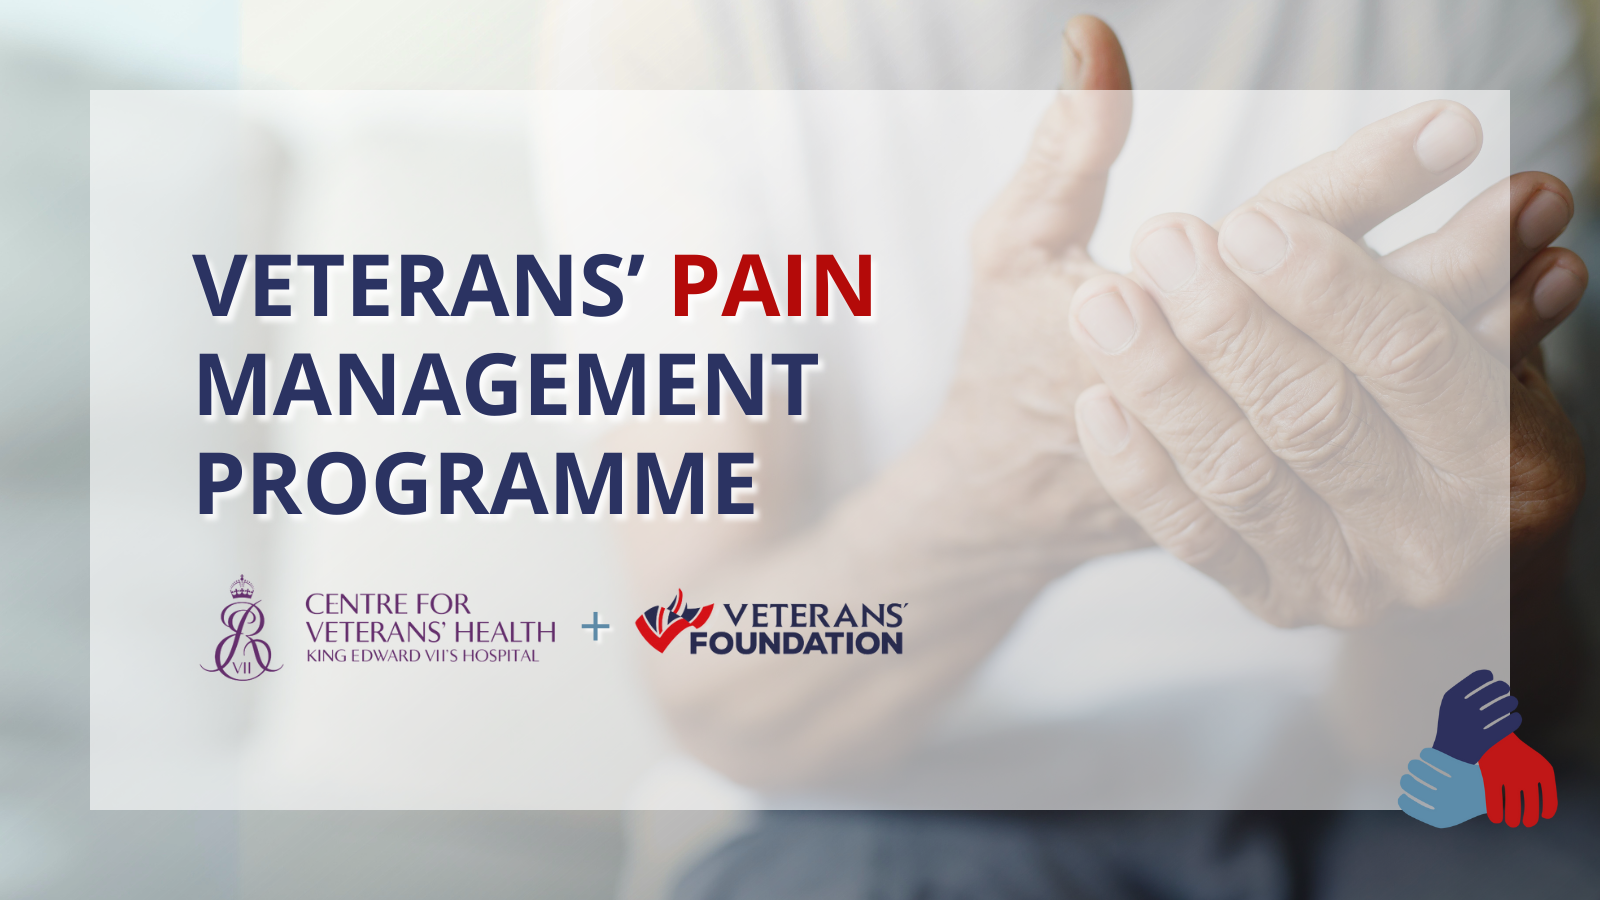 Veterans' Chronic Pain Management Programme